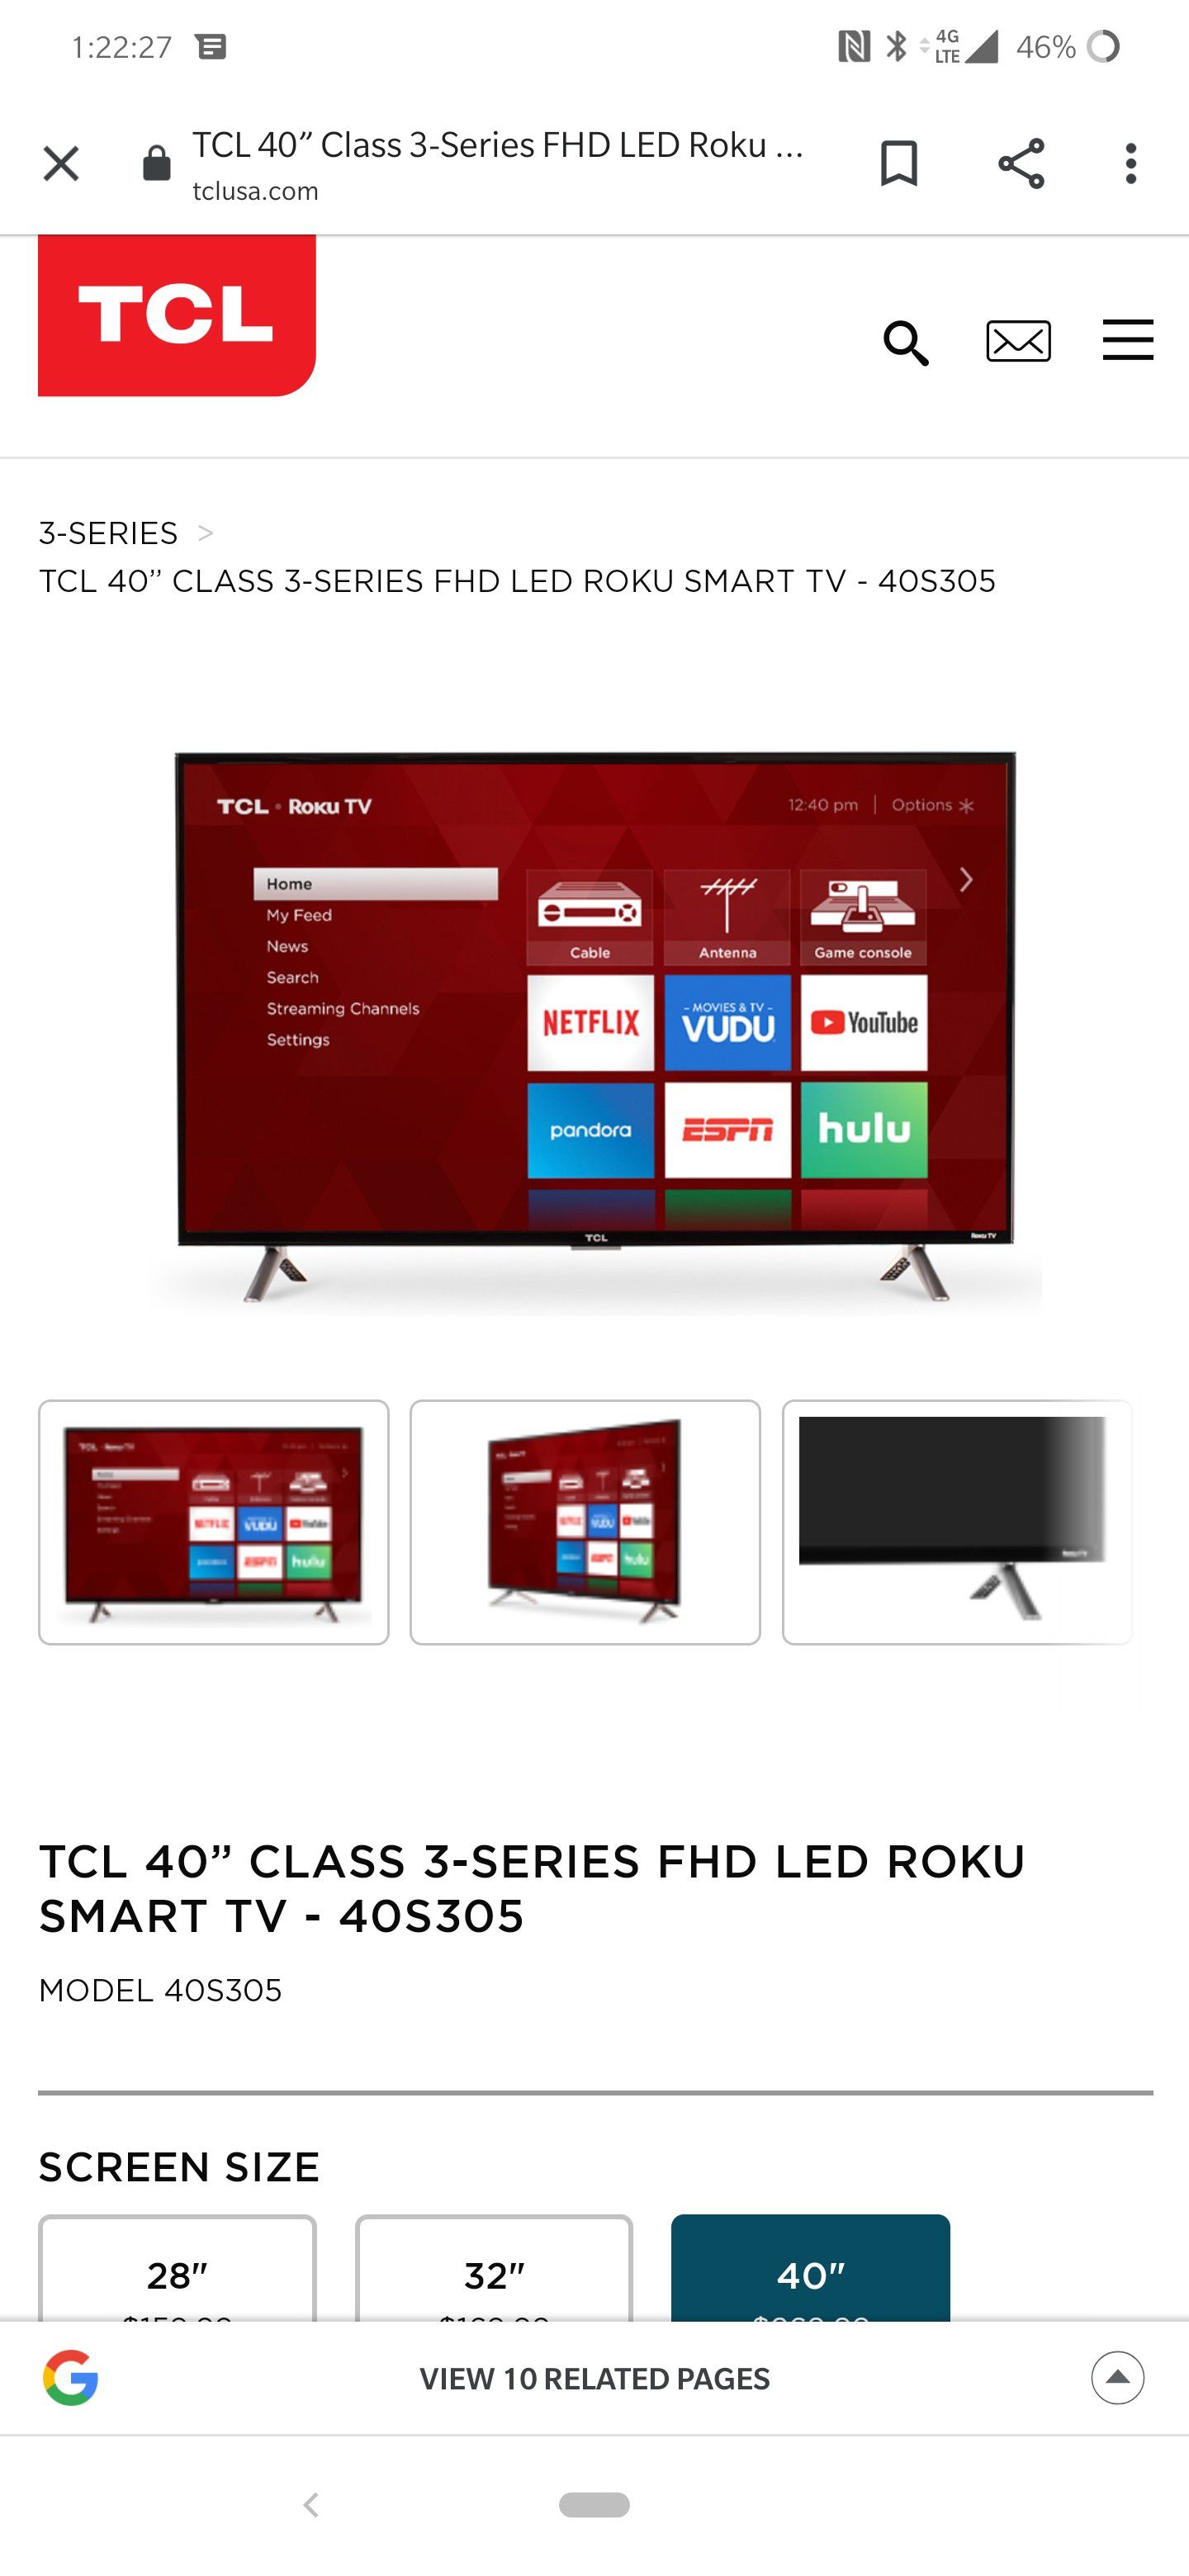 Brand New 40" TCL Roku Smart TV